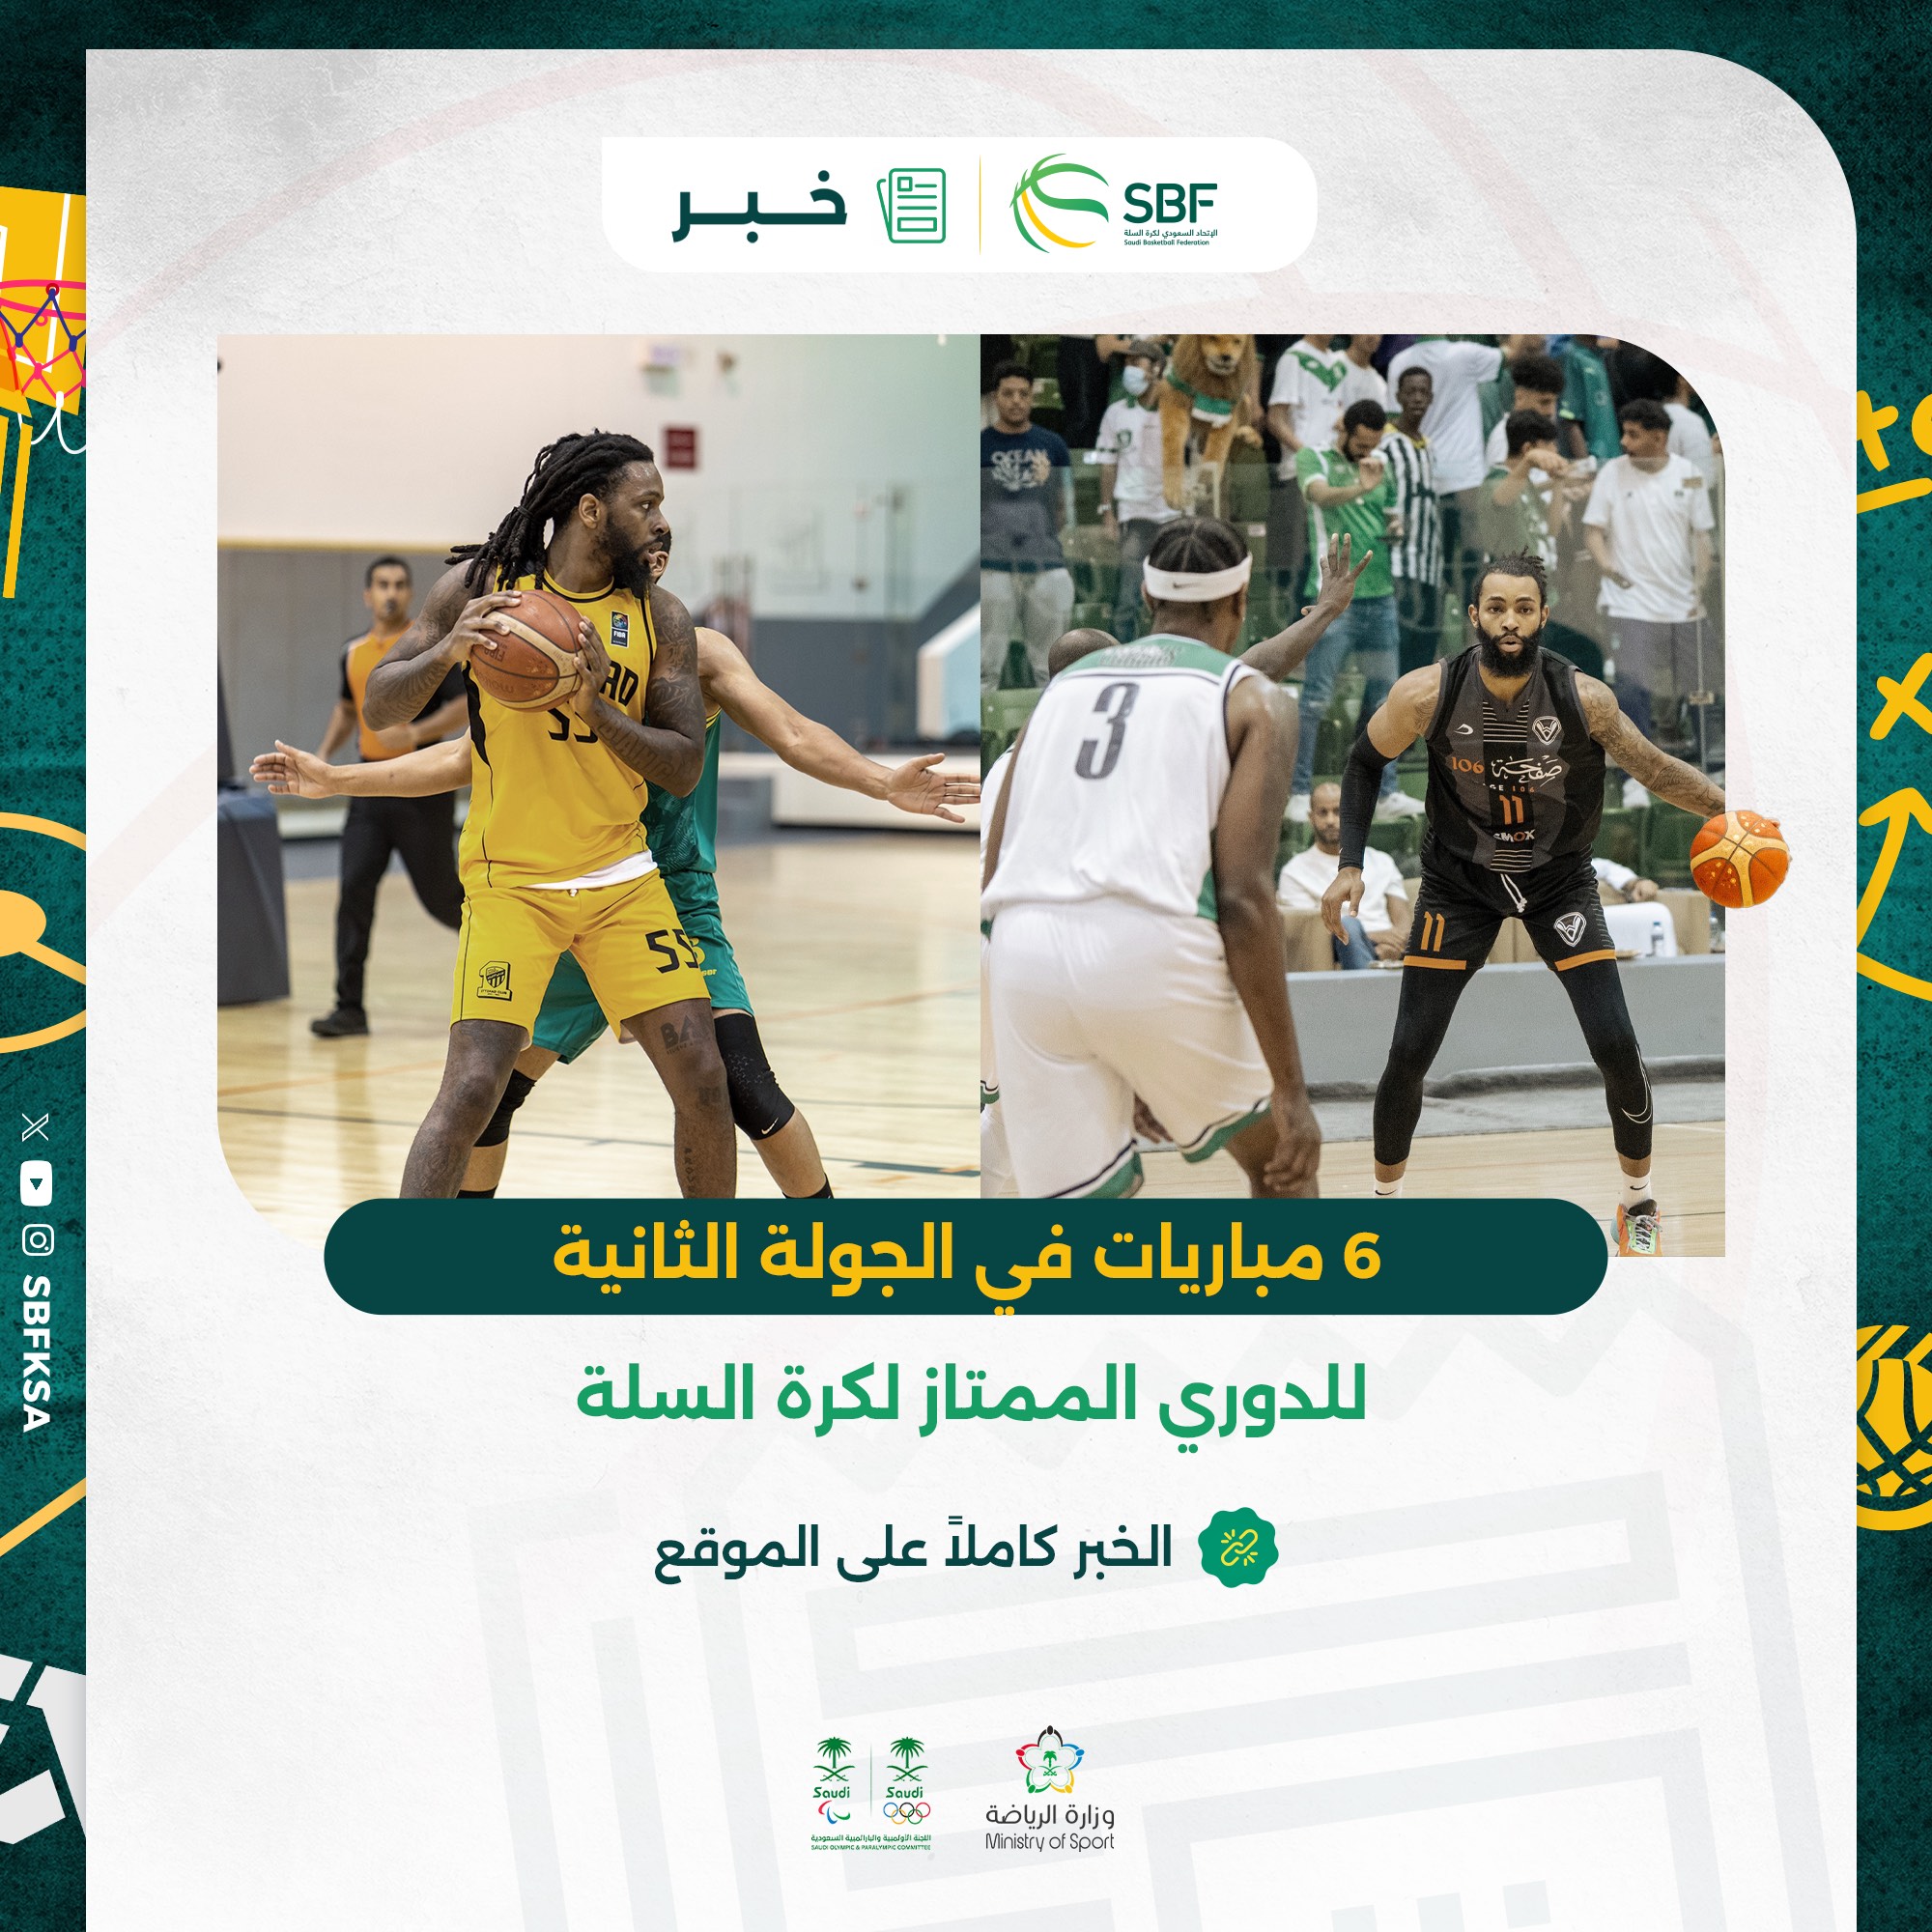 You are currently viewing (٦) مباريات في الجولة الثانية للدوري الممتاز لكرة السلة